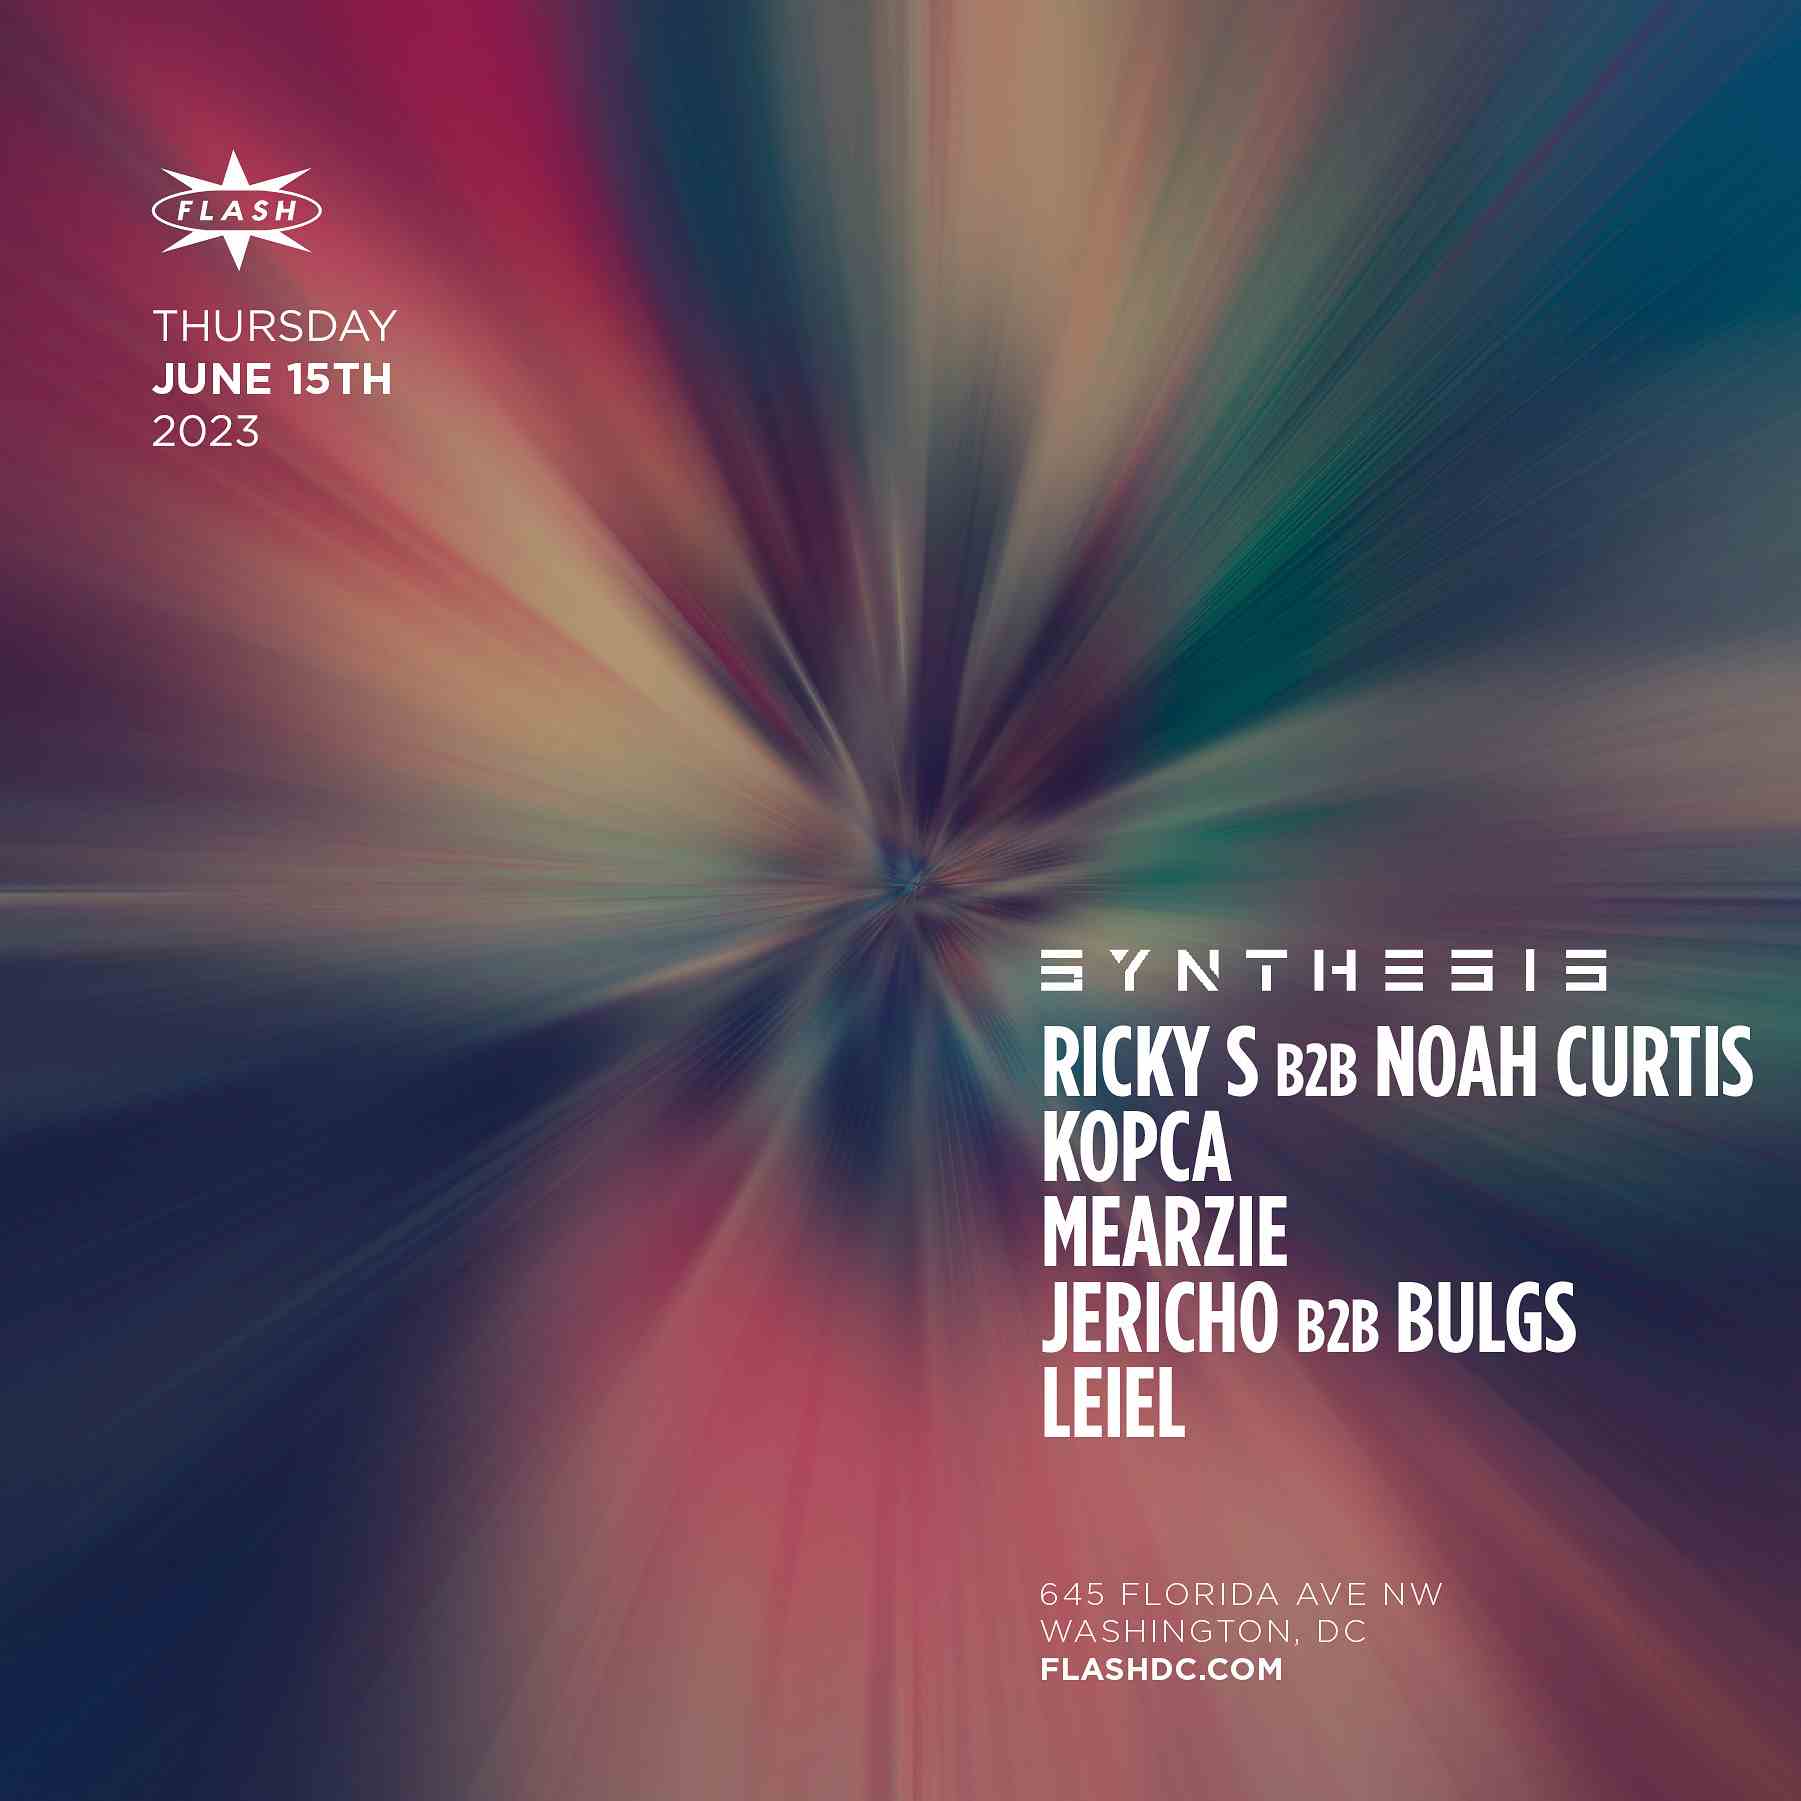 Flash x Synthesis: Ricky S b2b Noah Curtis - Kopca - Mearzie event flyer